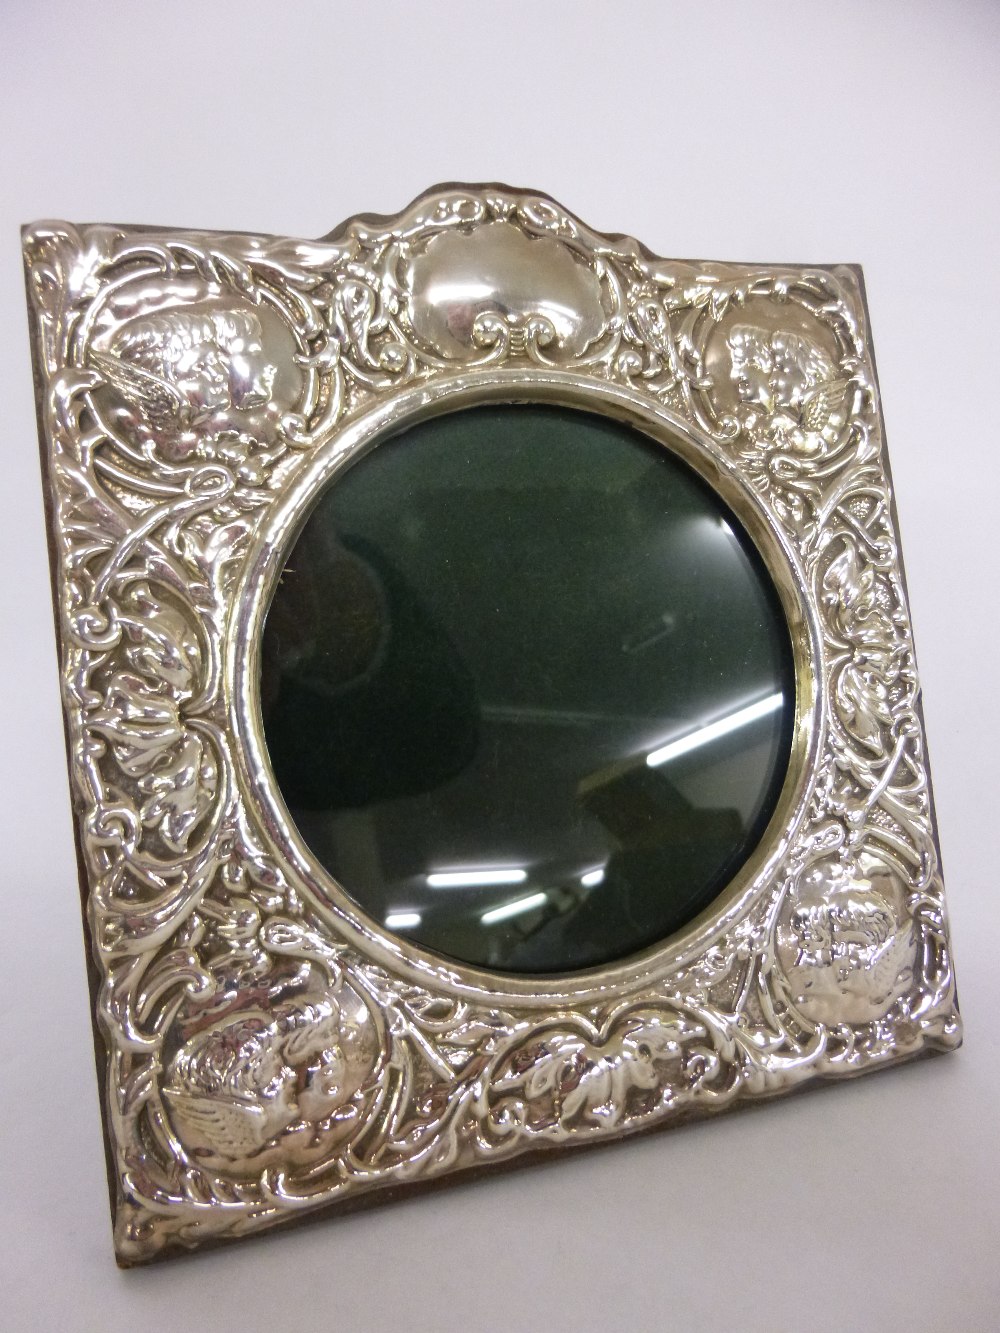 Silver photograph frame with embossed cherub decoration, hallmarked Birmingham 1995, 5.5x6"